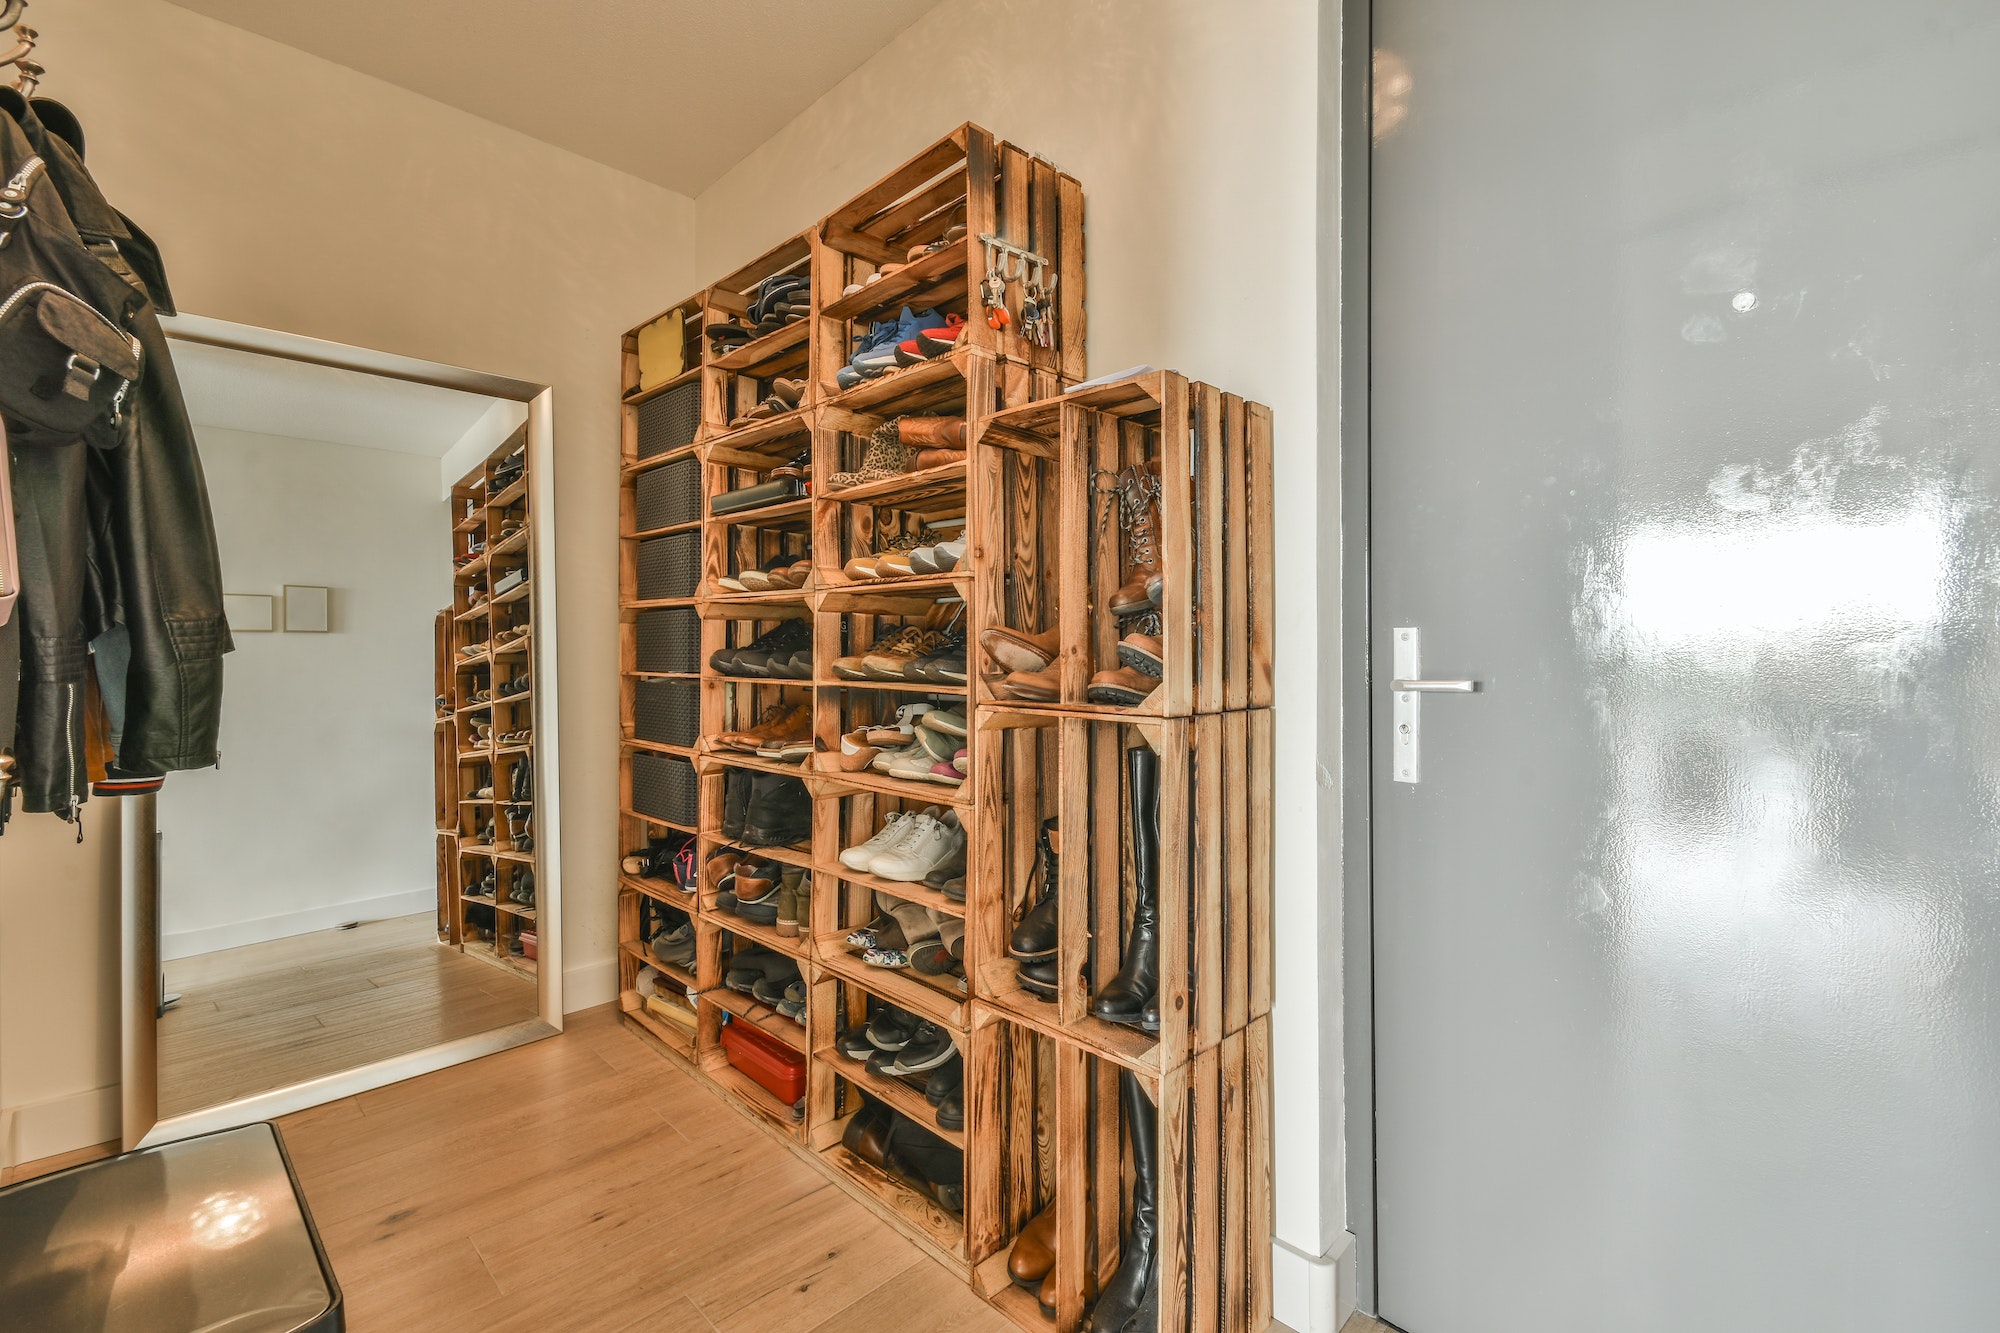 DIY: Build a shoe rack from a closet door